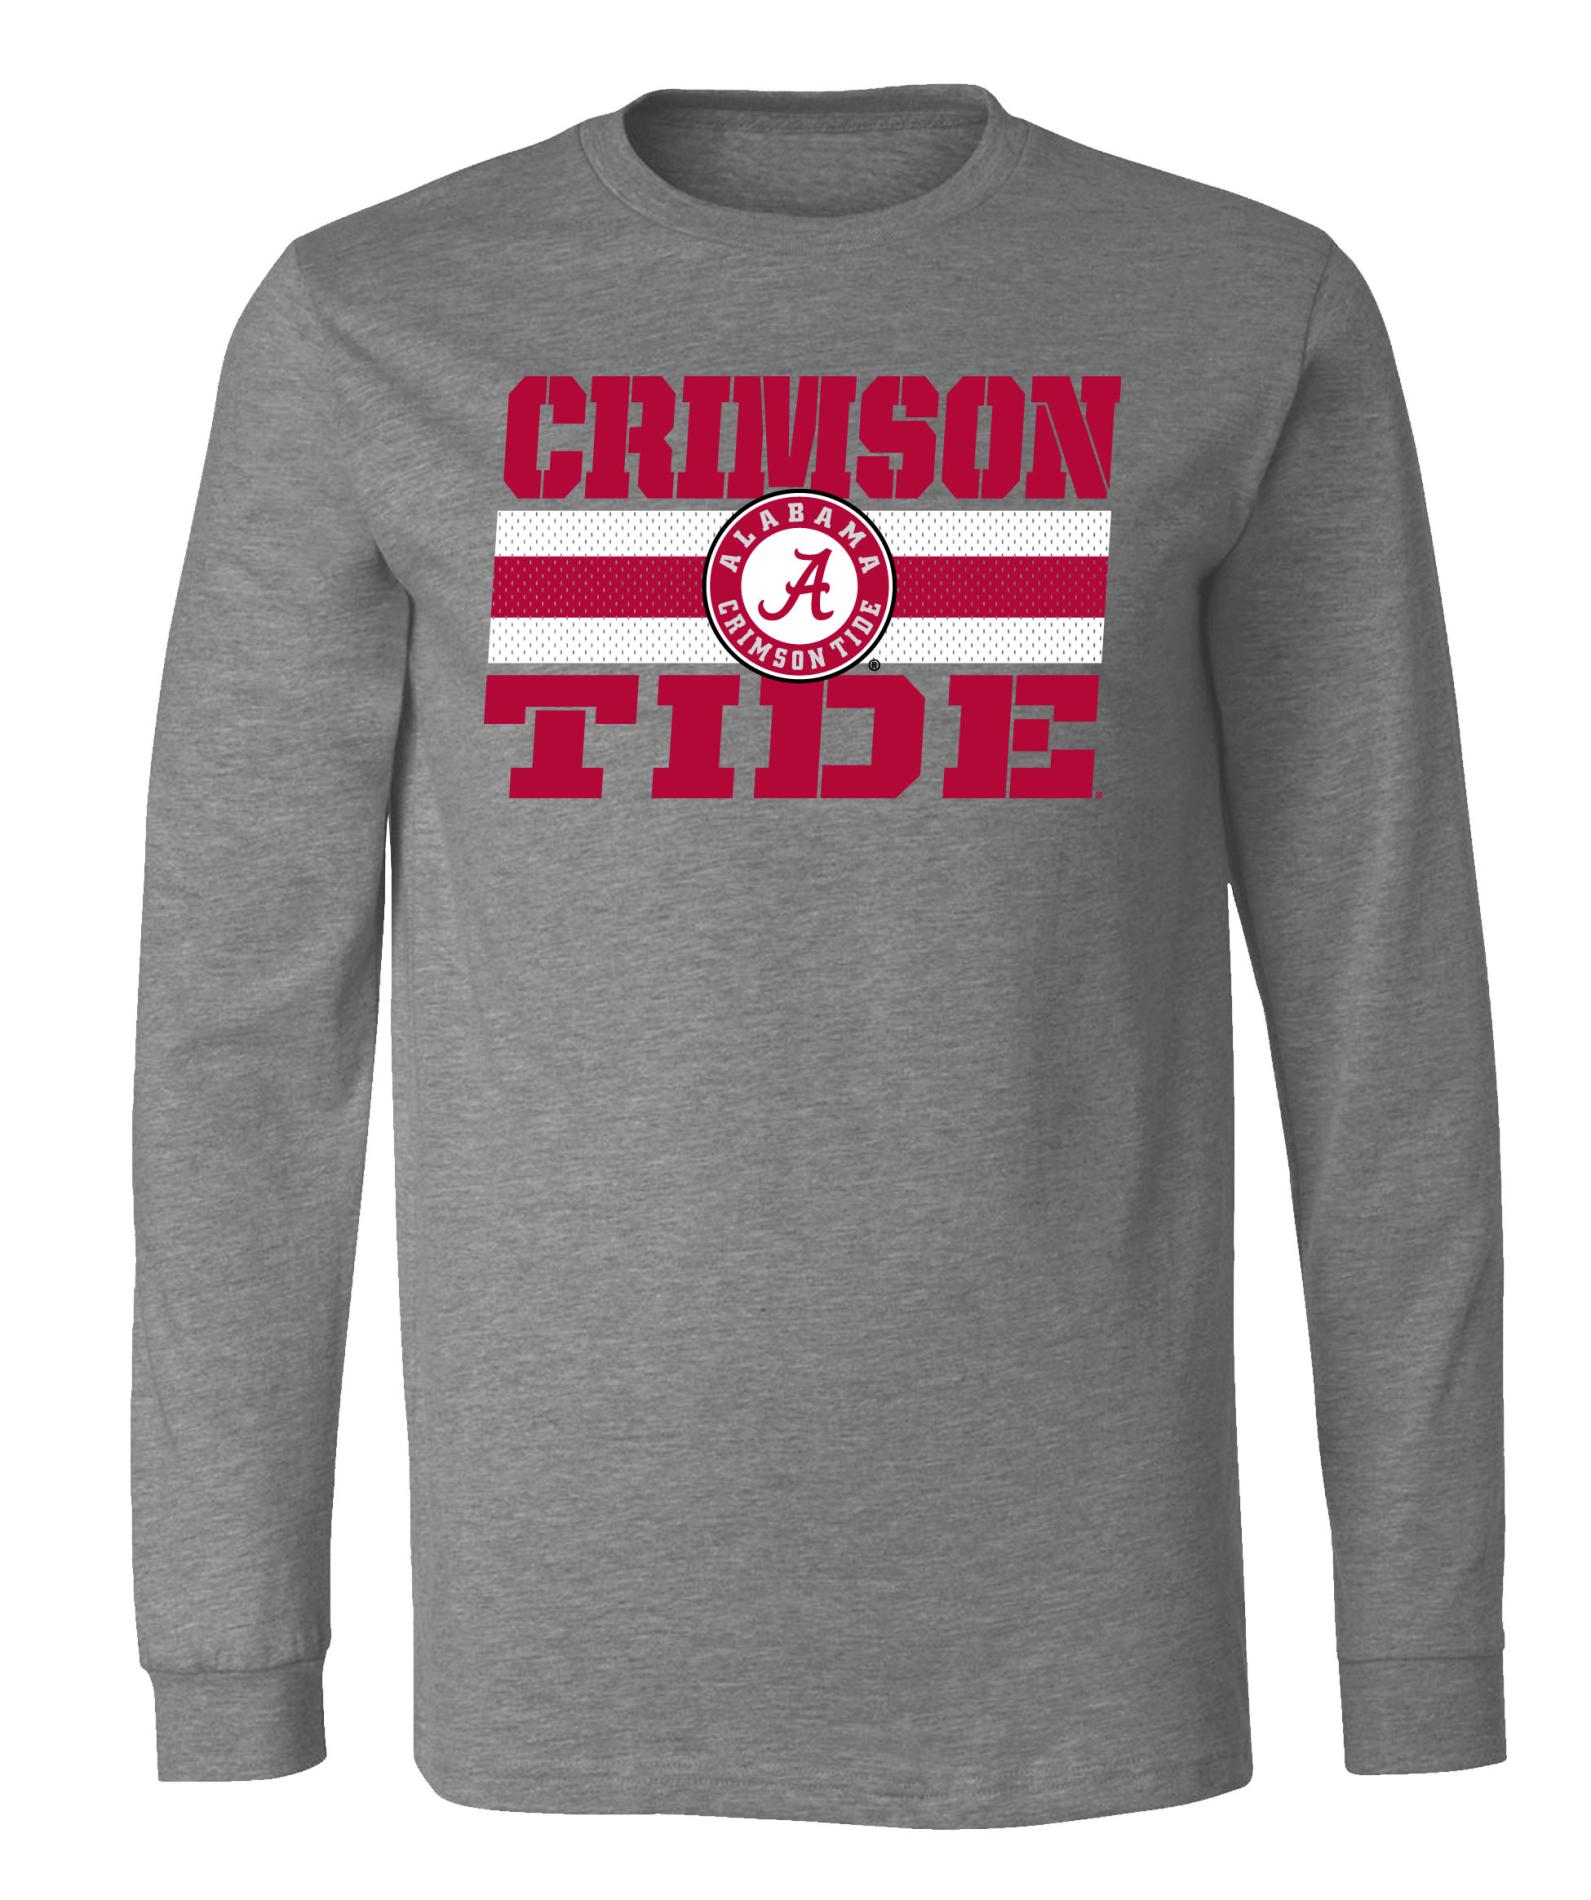 NCAA Boys' Long-Sleeve T-Shirt - Alabama Crimson Tide